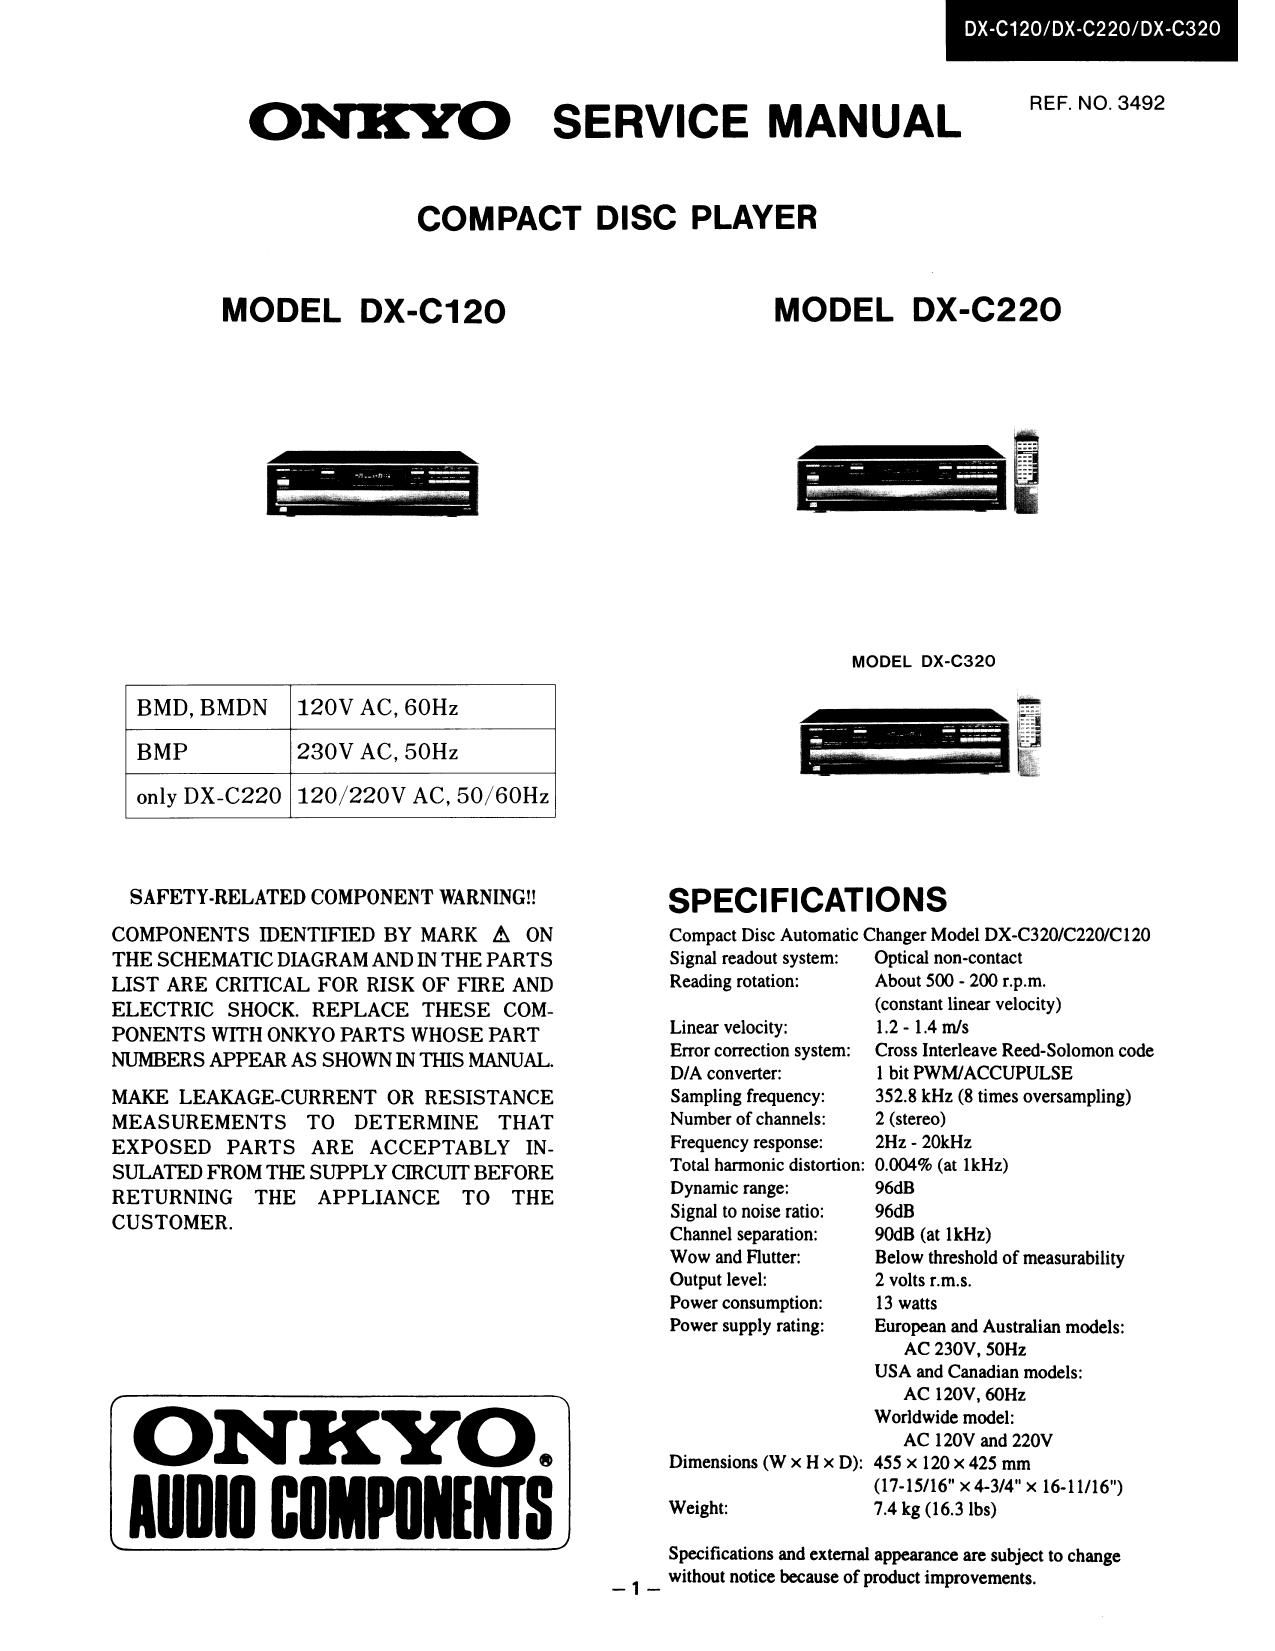 Onkyo DXC 120 Service Manual